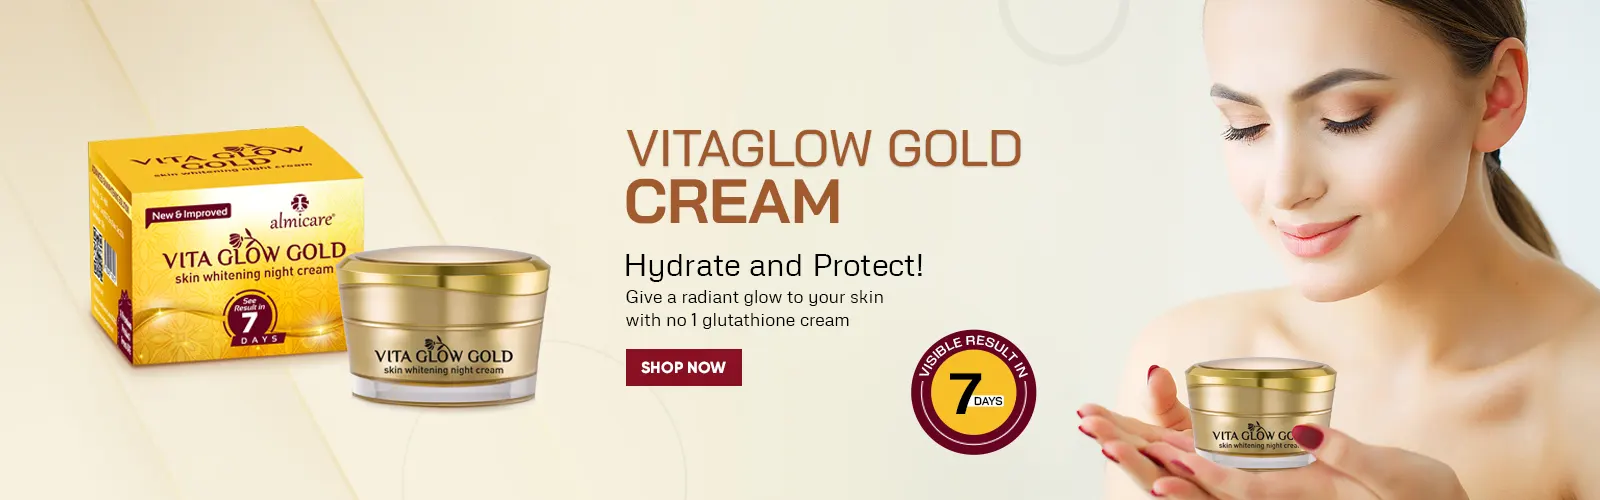 Vita Glow Gold Cream